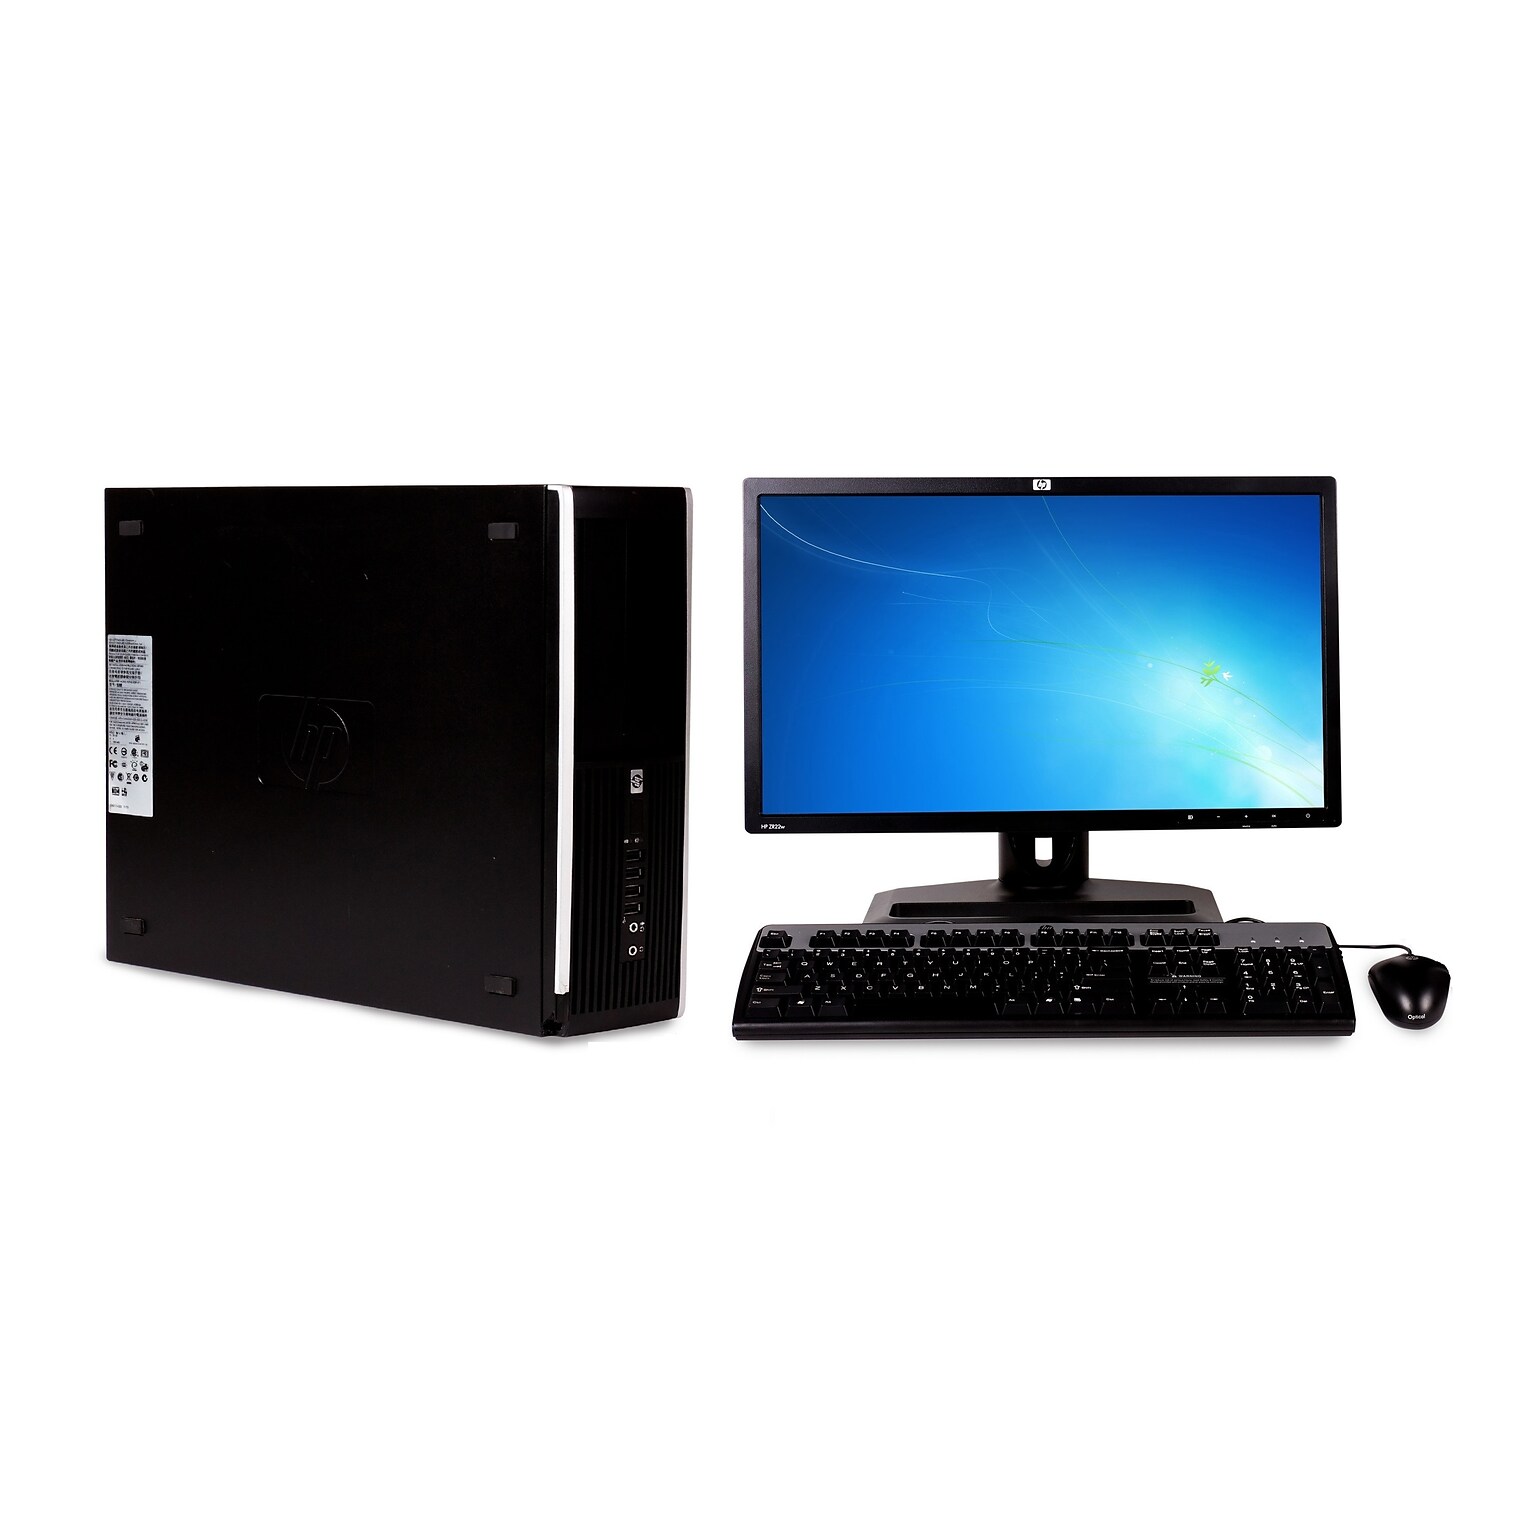 HP 6300 Pro Refurbished SFF Desktop Computer with 22 Monitor, Intel i5, 16GB Memory, 1TB HDD, Windows 10 Home